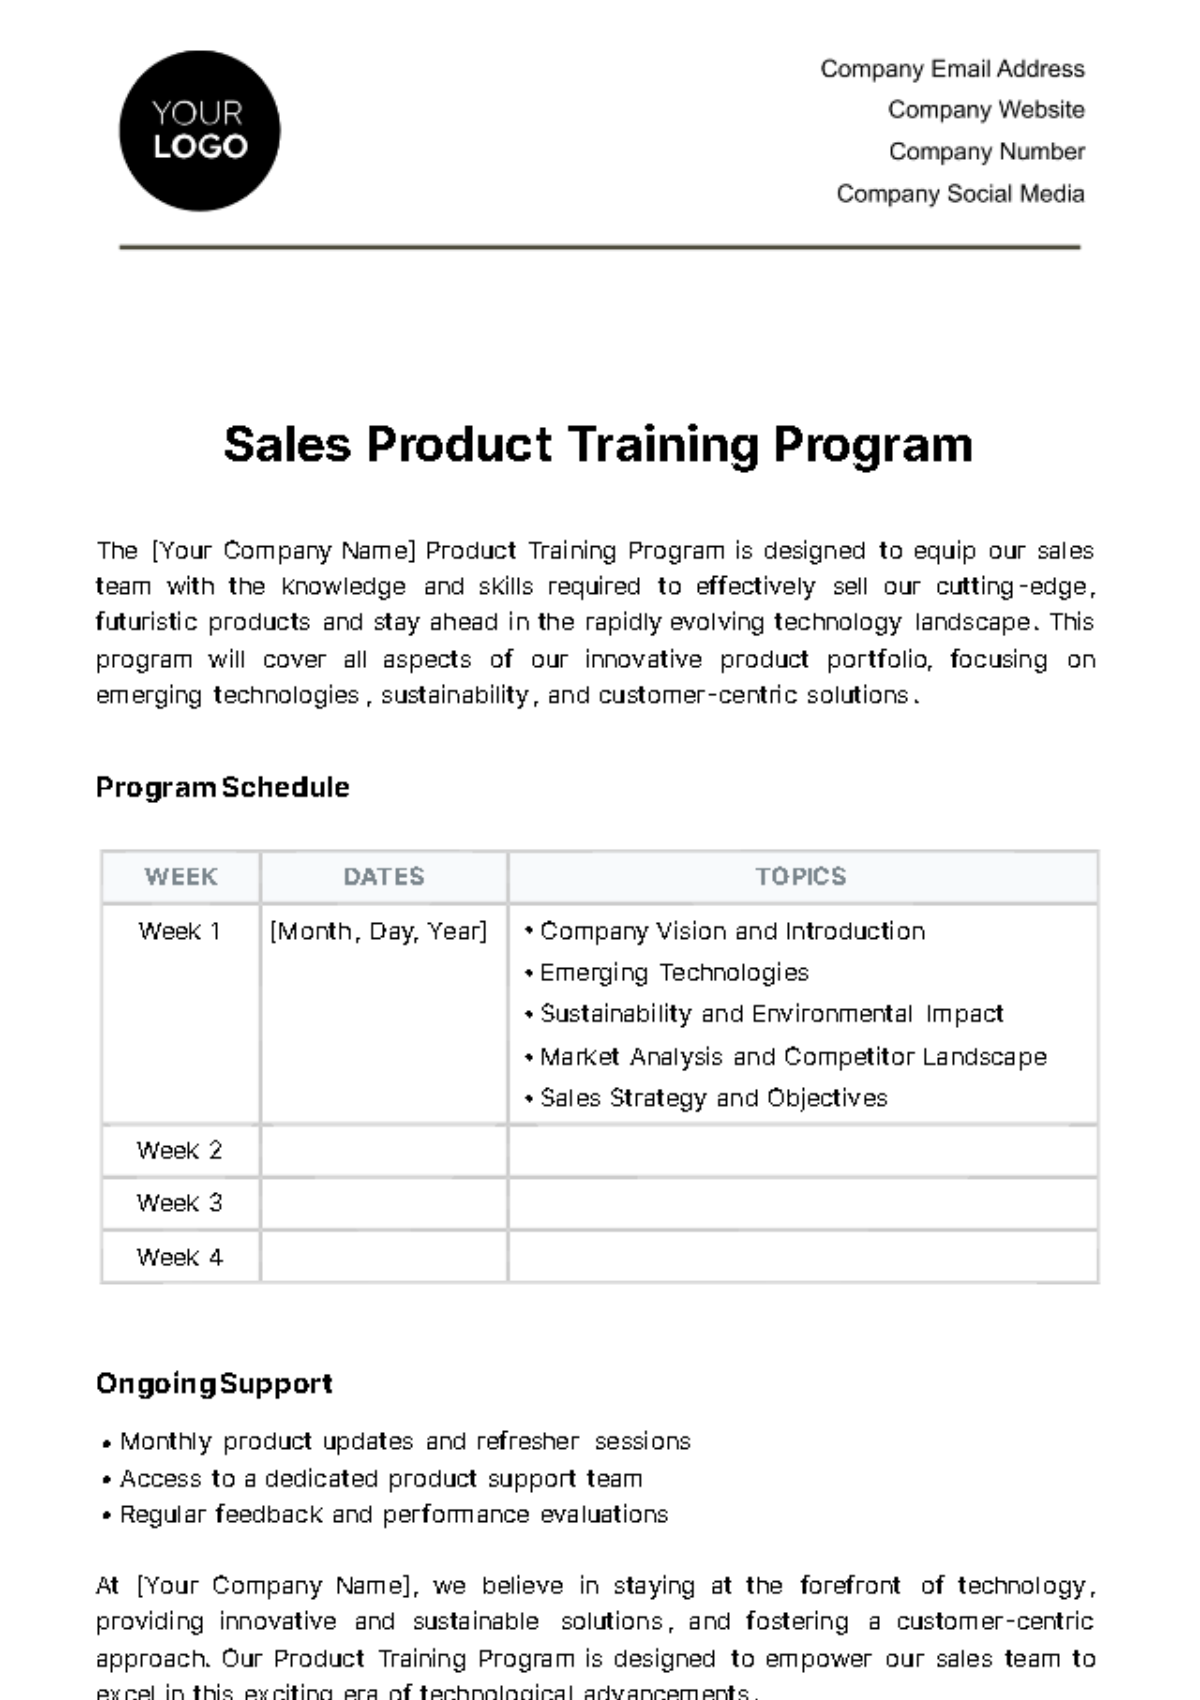 Sales Product Training Program Template